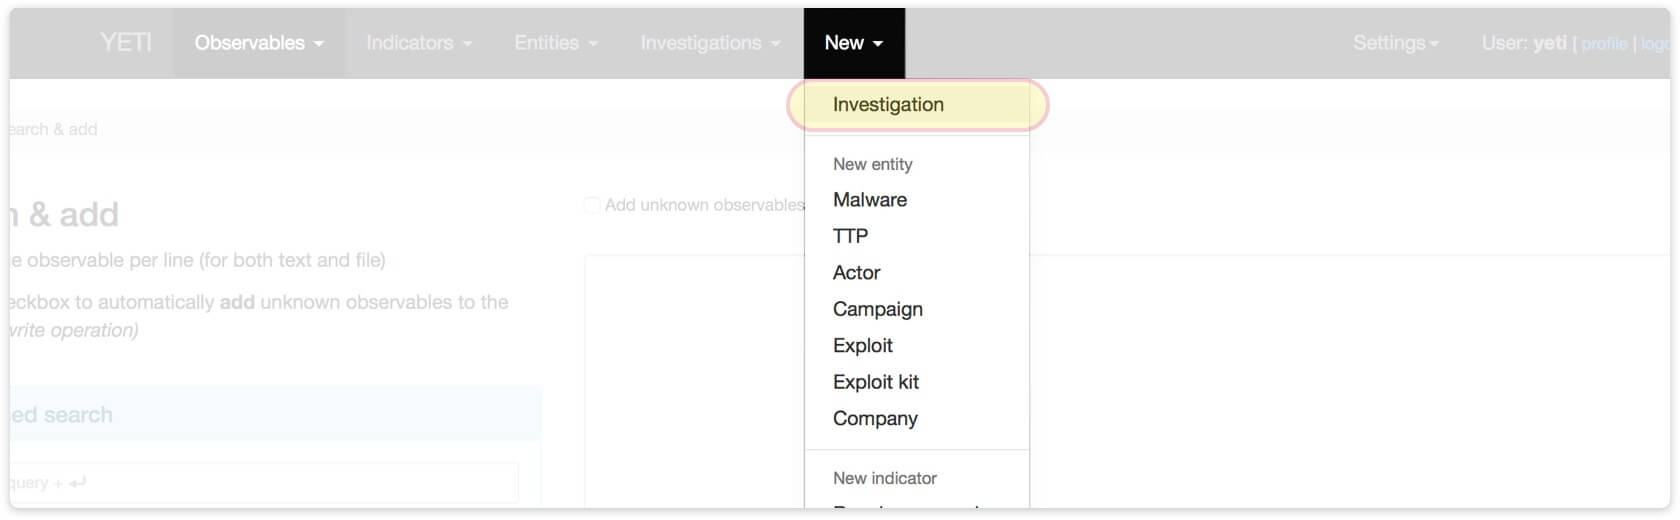 Create new investigation. Go to 'New' > 'Investigation'